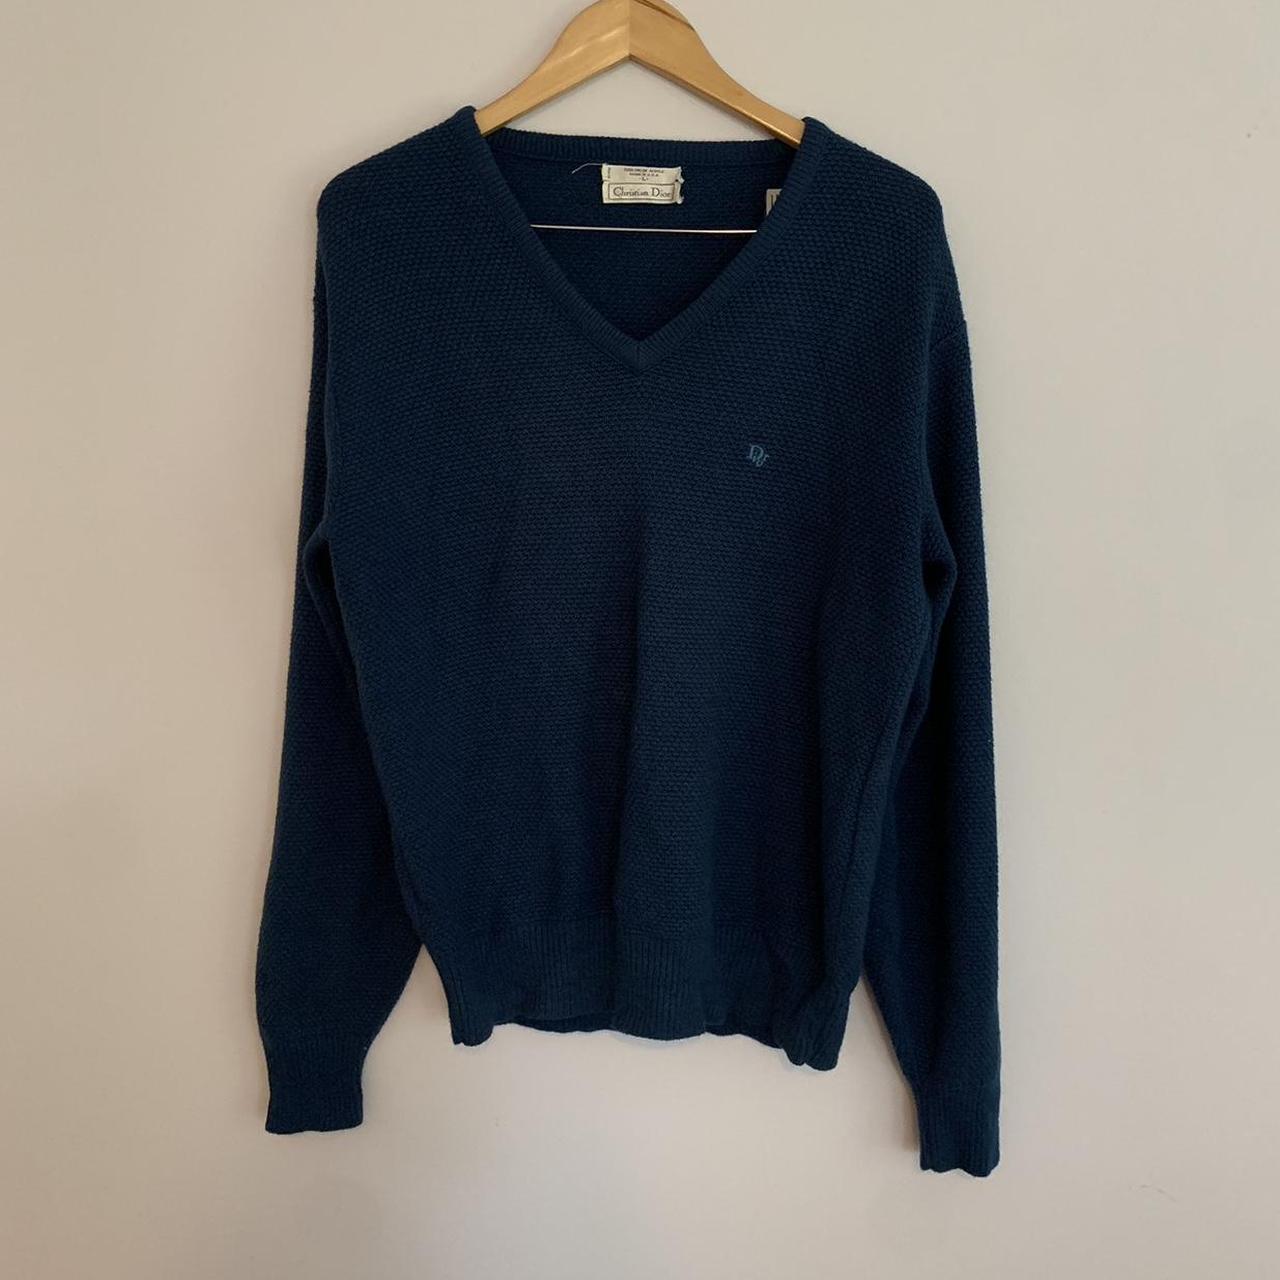 Deep blue Christian Dior knit sweater size L but is... - Depop